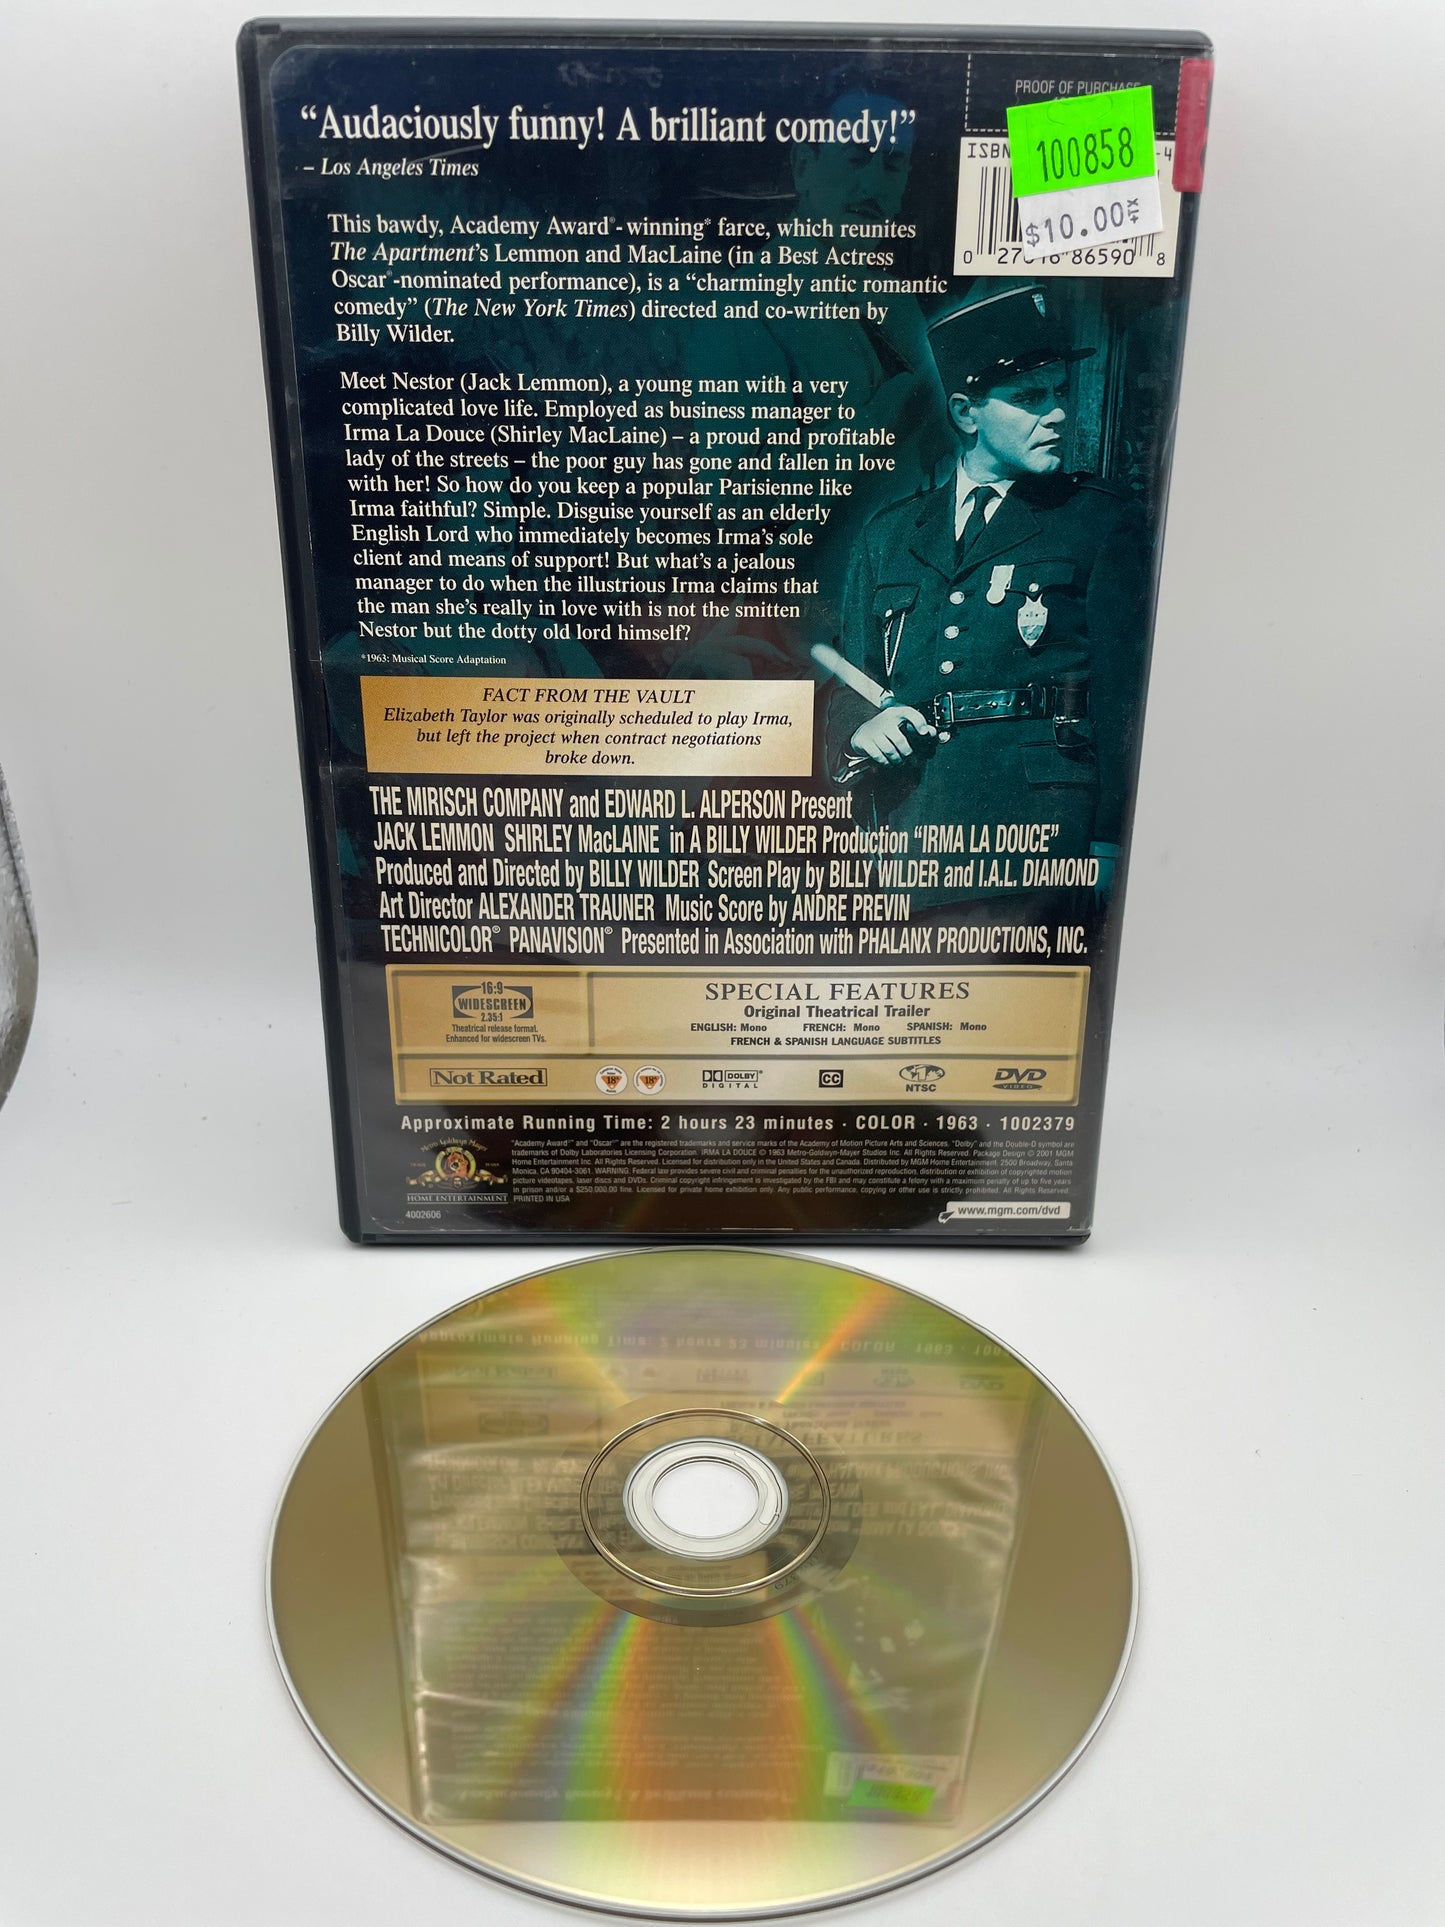 DVD - Irma La Douce #100858